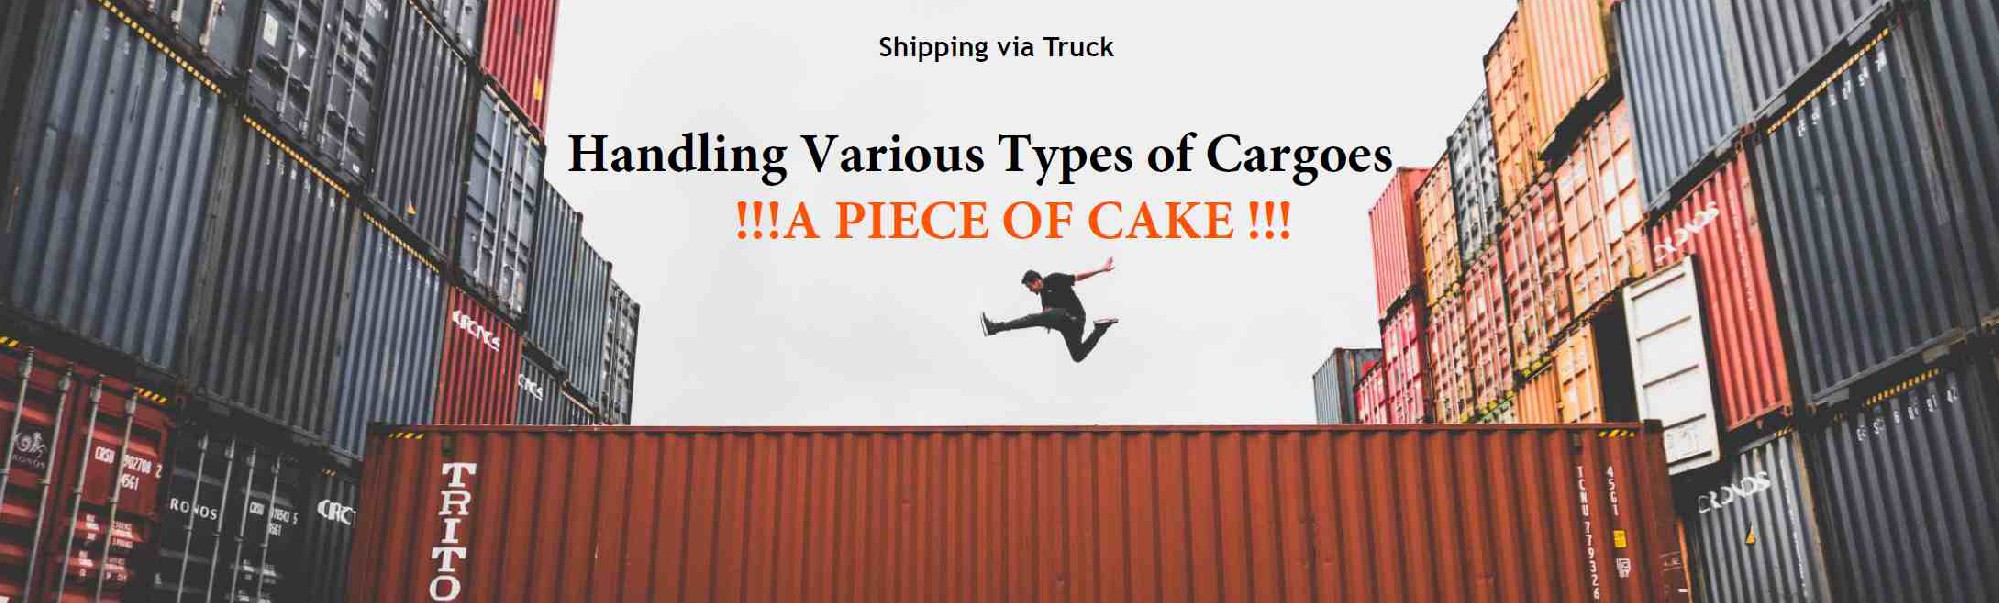 Cargo types in truck service